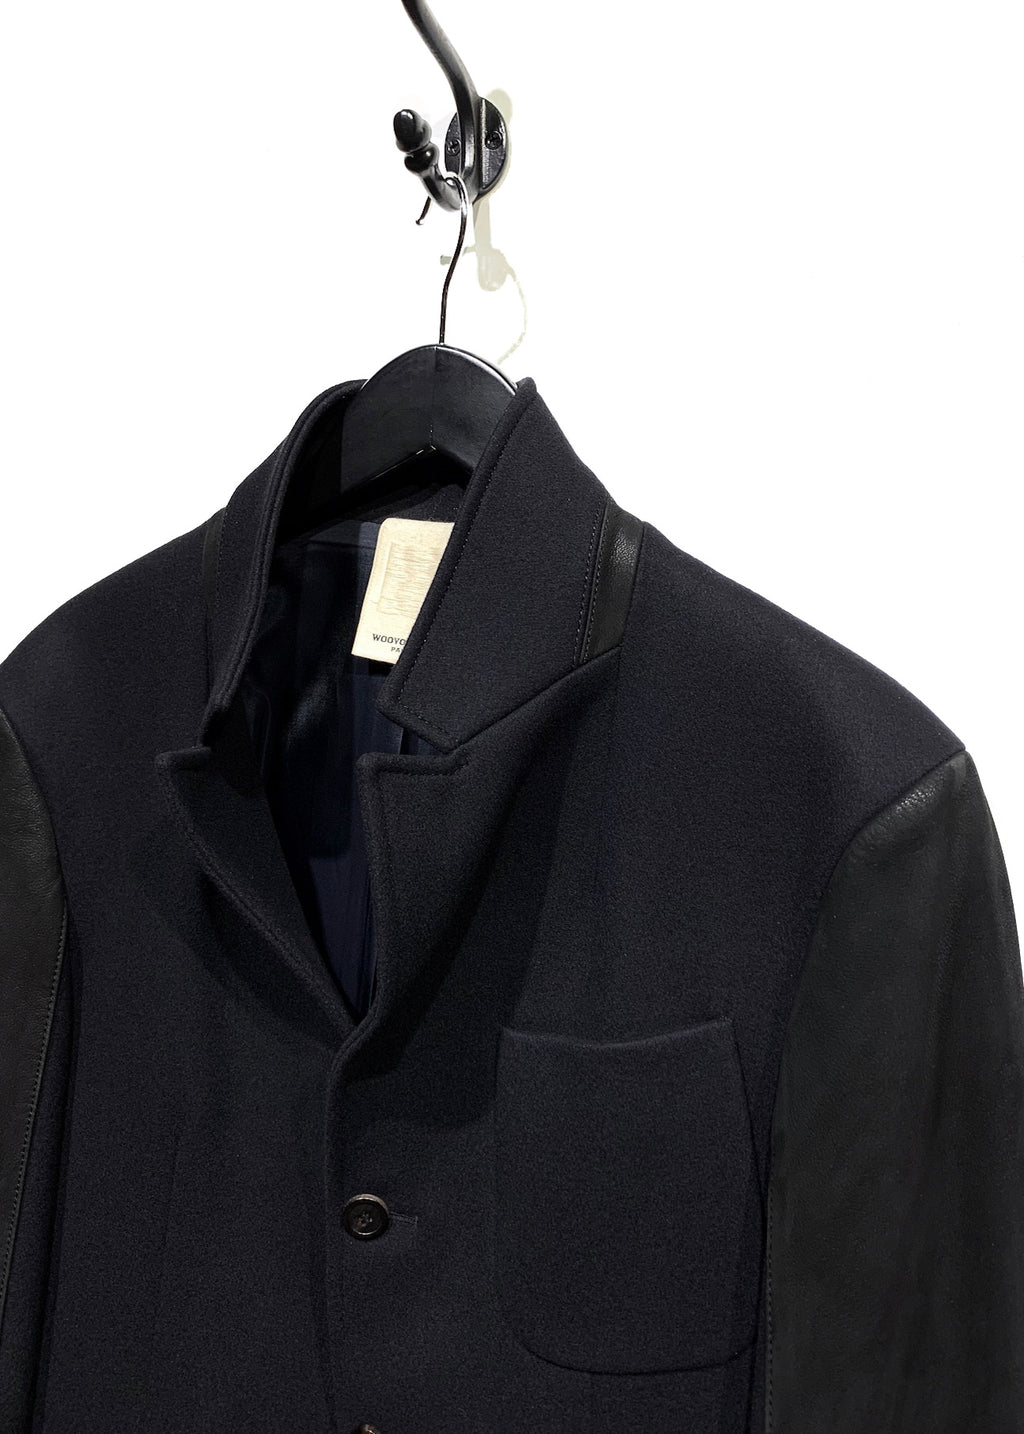 Blazer en laine bleu marine Wooyoungmi avec manches en cuir noir